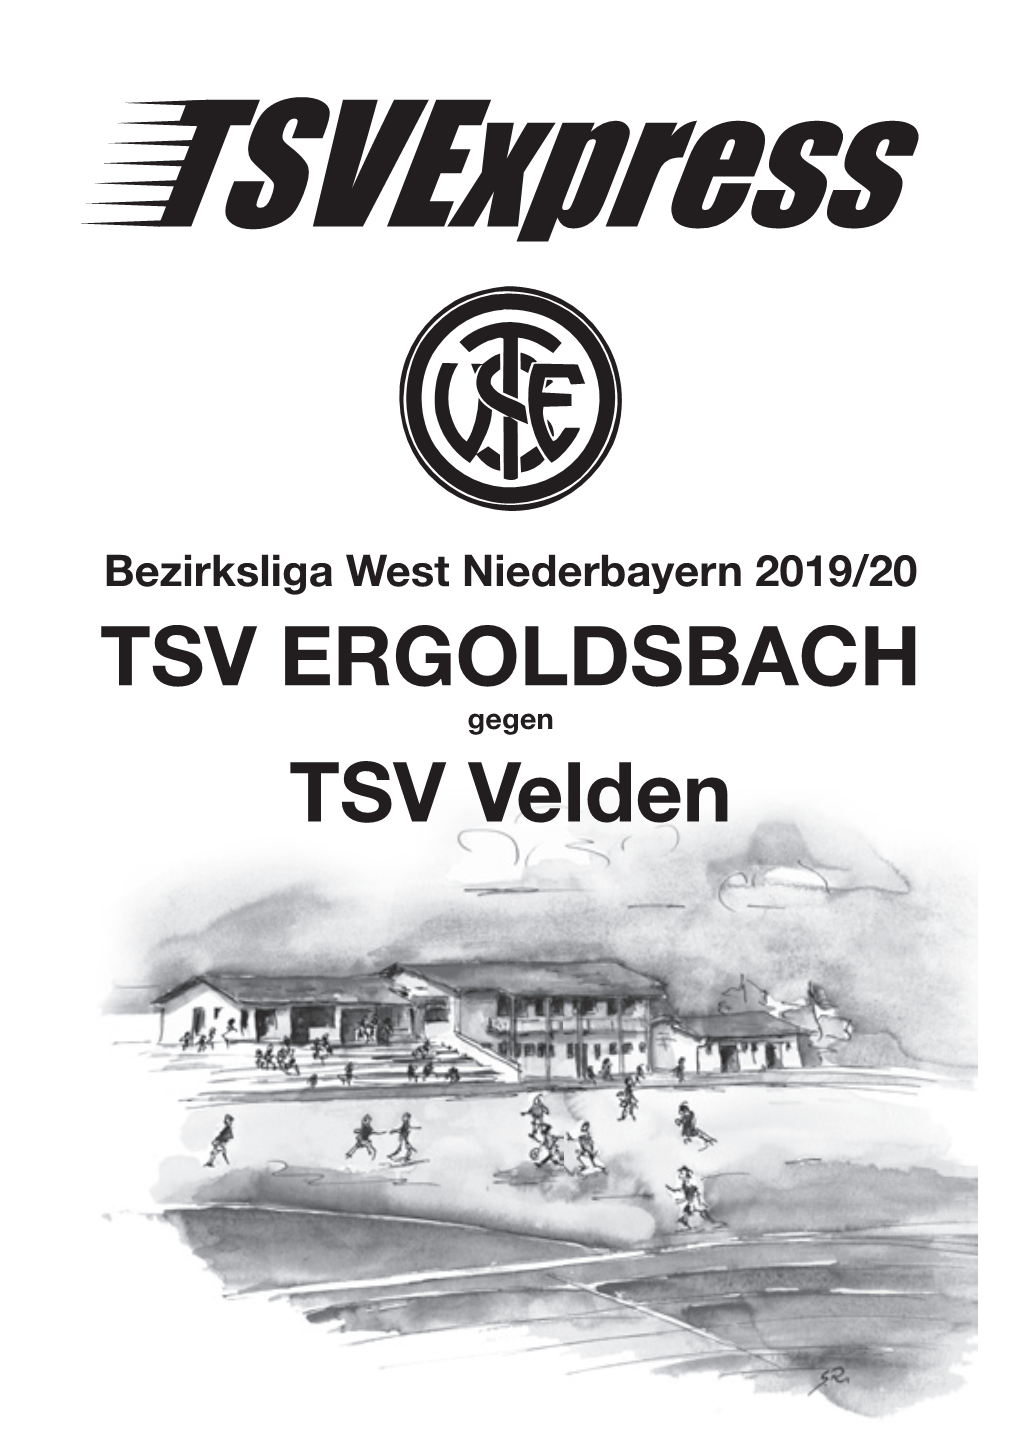 TSV Ergoldsbach TSV Velden 143 26.10.19 16:00 FC Ergolding SV Neufraunhofen 144 26.10.19 17:00 ASCK Simbach A